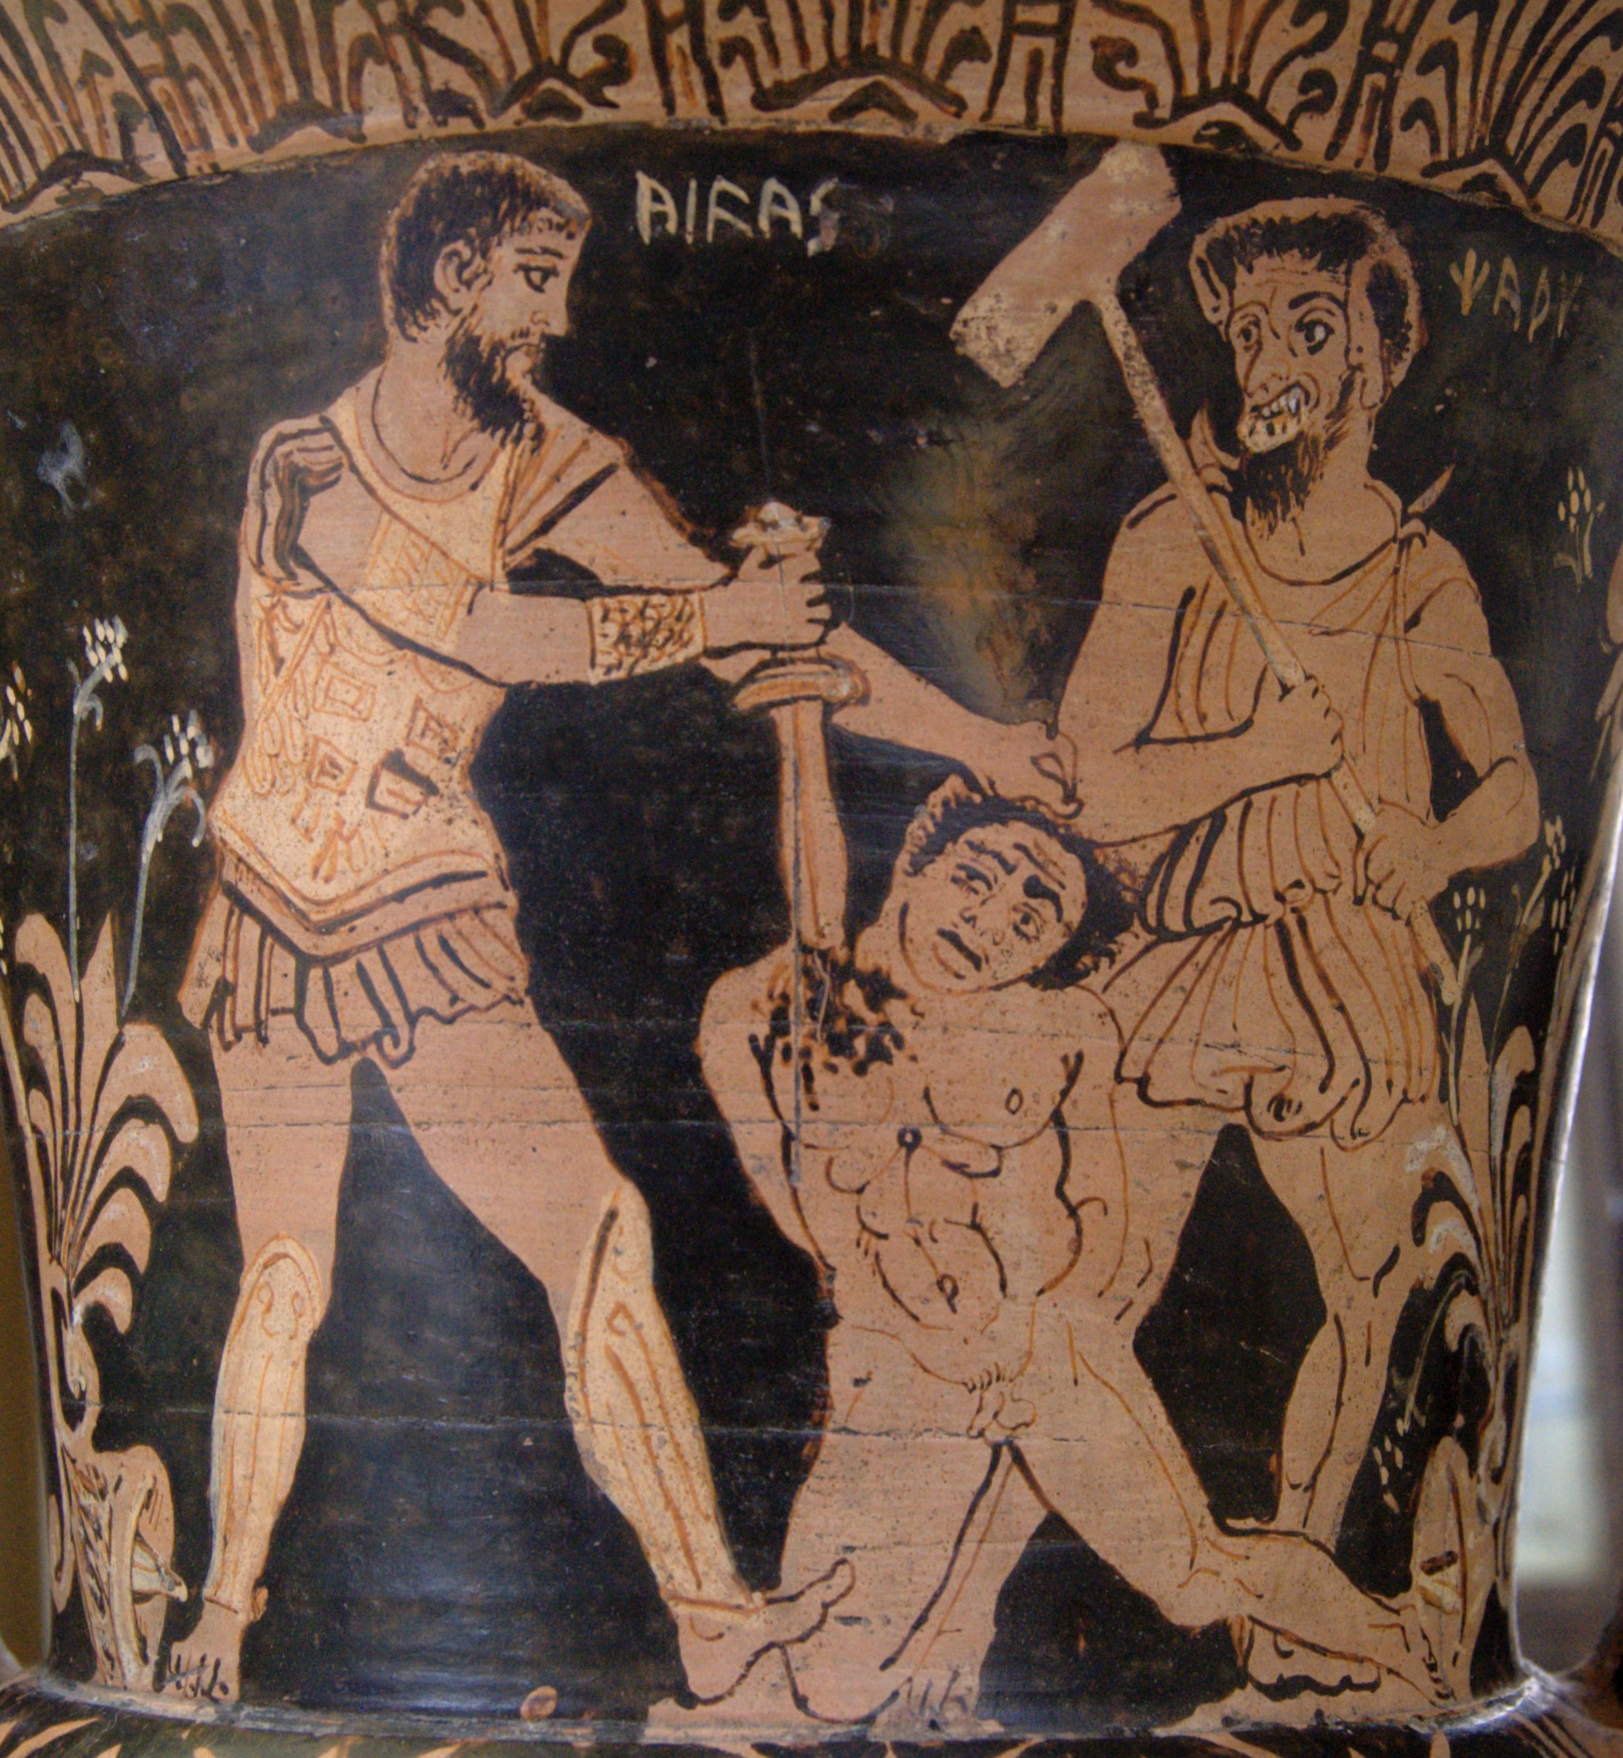 Achilles killing a Trojan prisoner in front of Charun, armed with a hammer (Public domain: Bibi Saint-Pol)